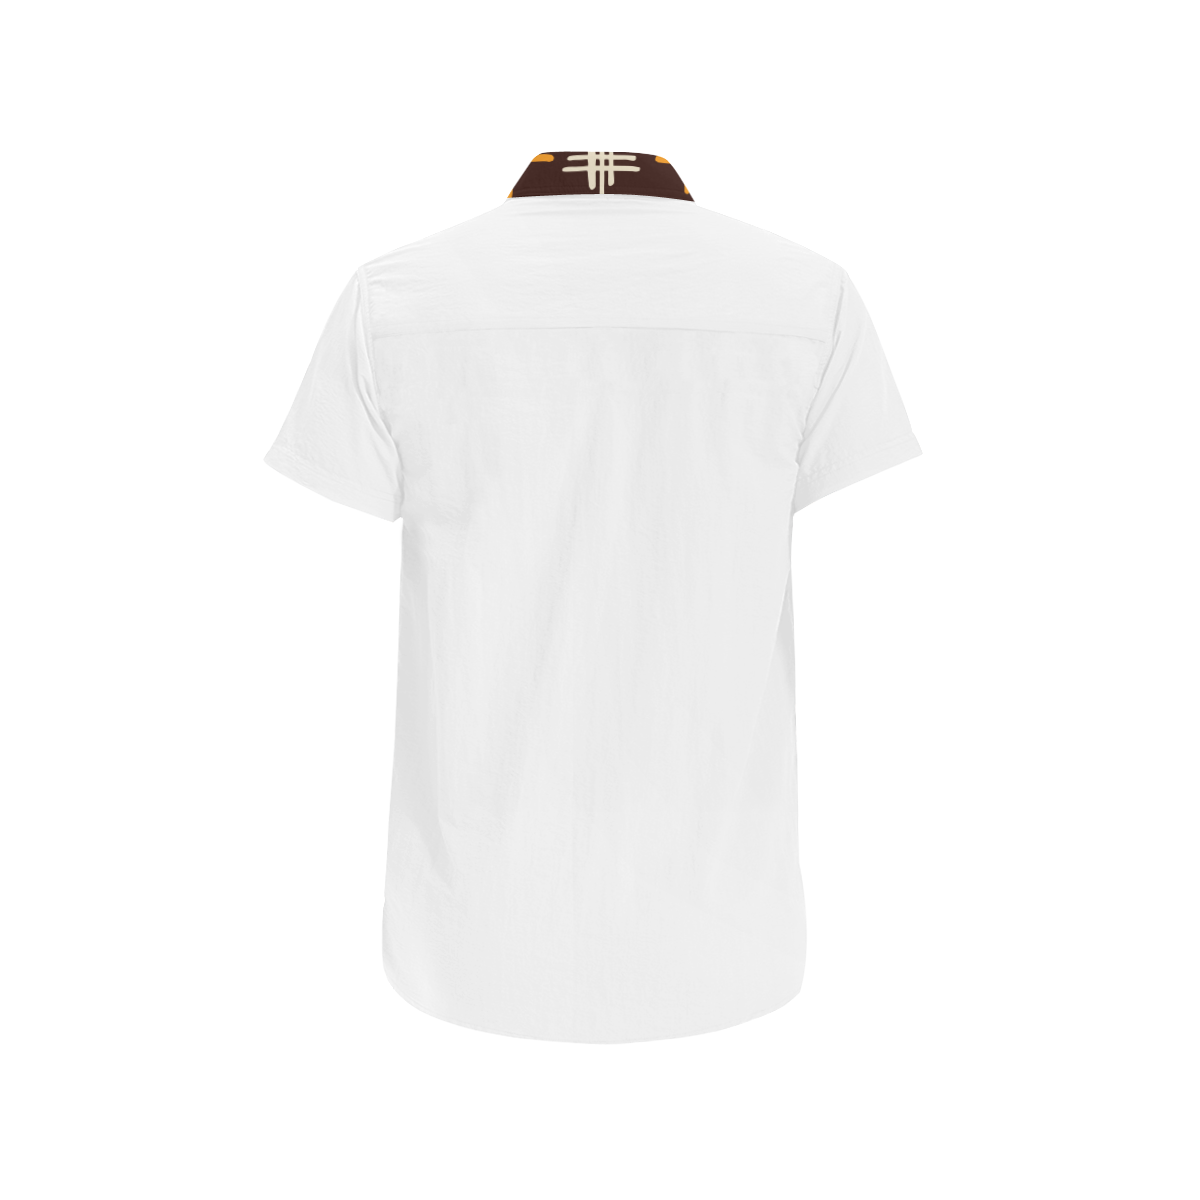 M Shirt C 4 Men's All Over Print Short Sleeve Shirt (Model T53)